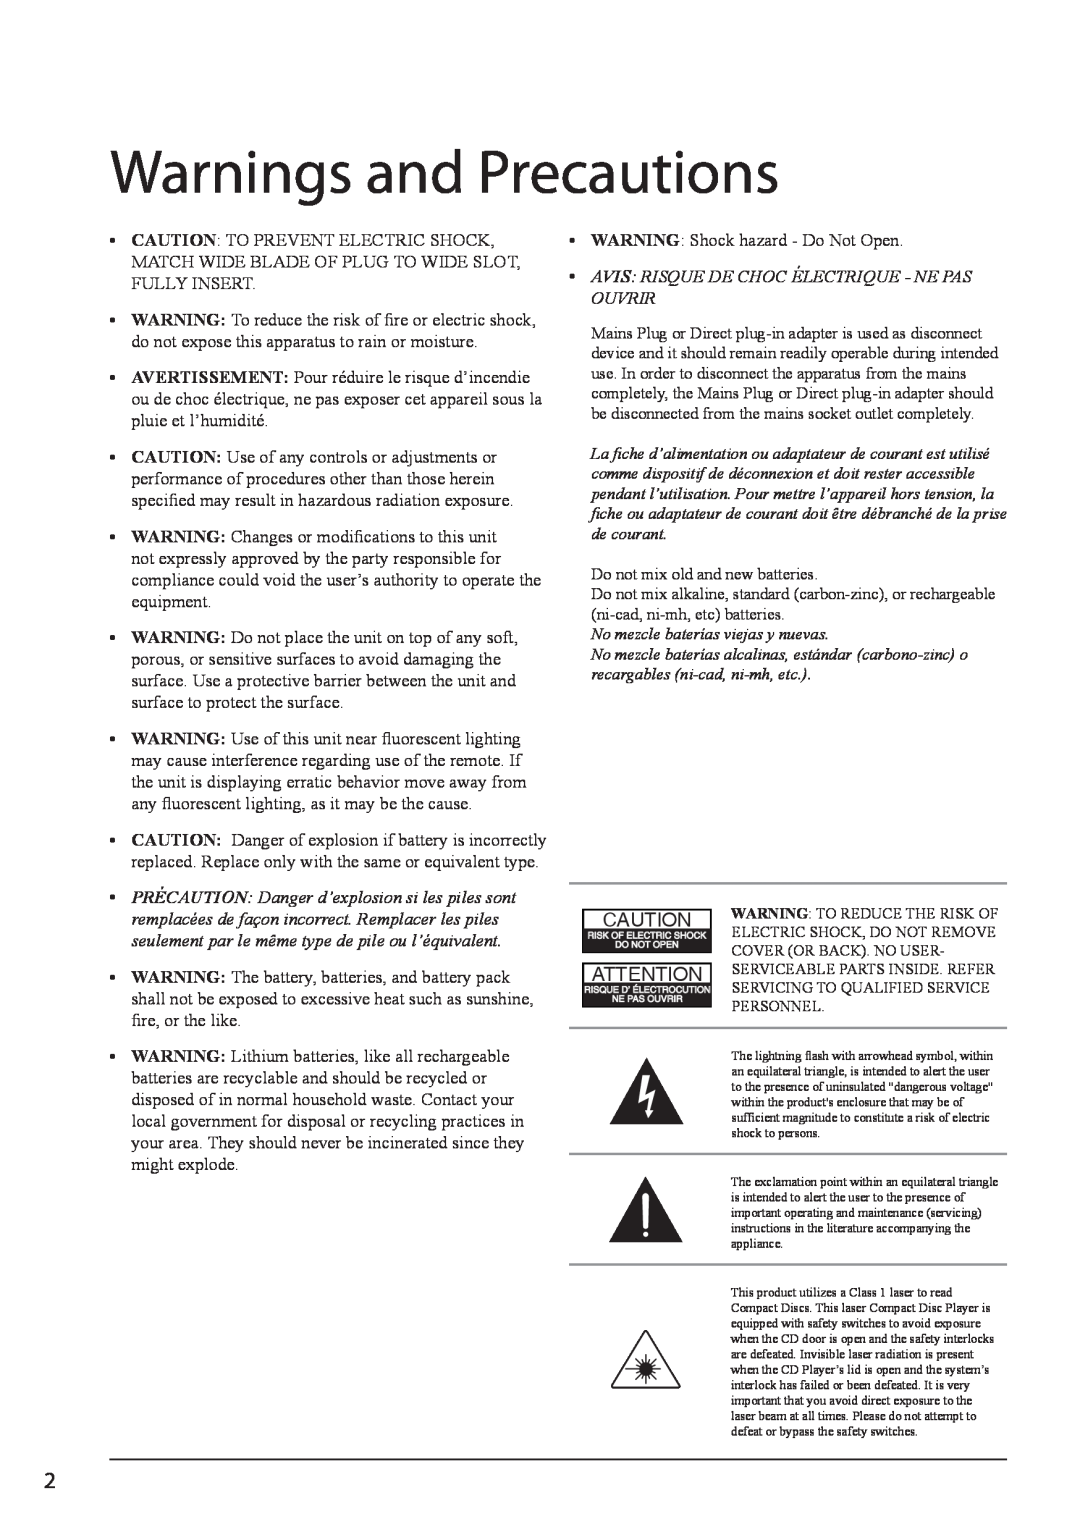 GPX KC222S manual Warnings and Precautions 